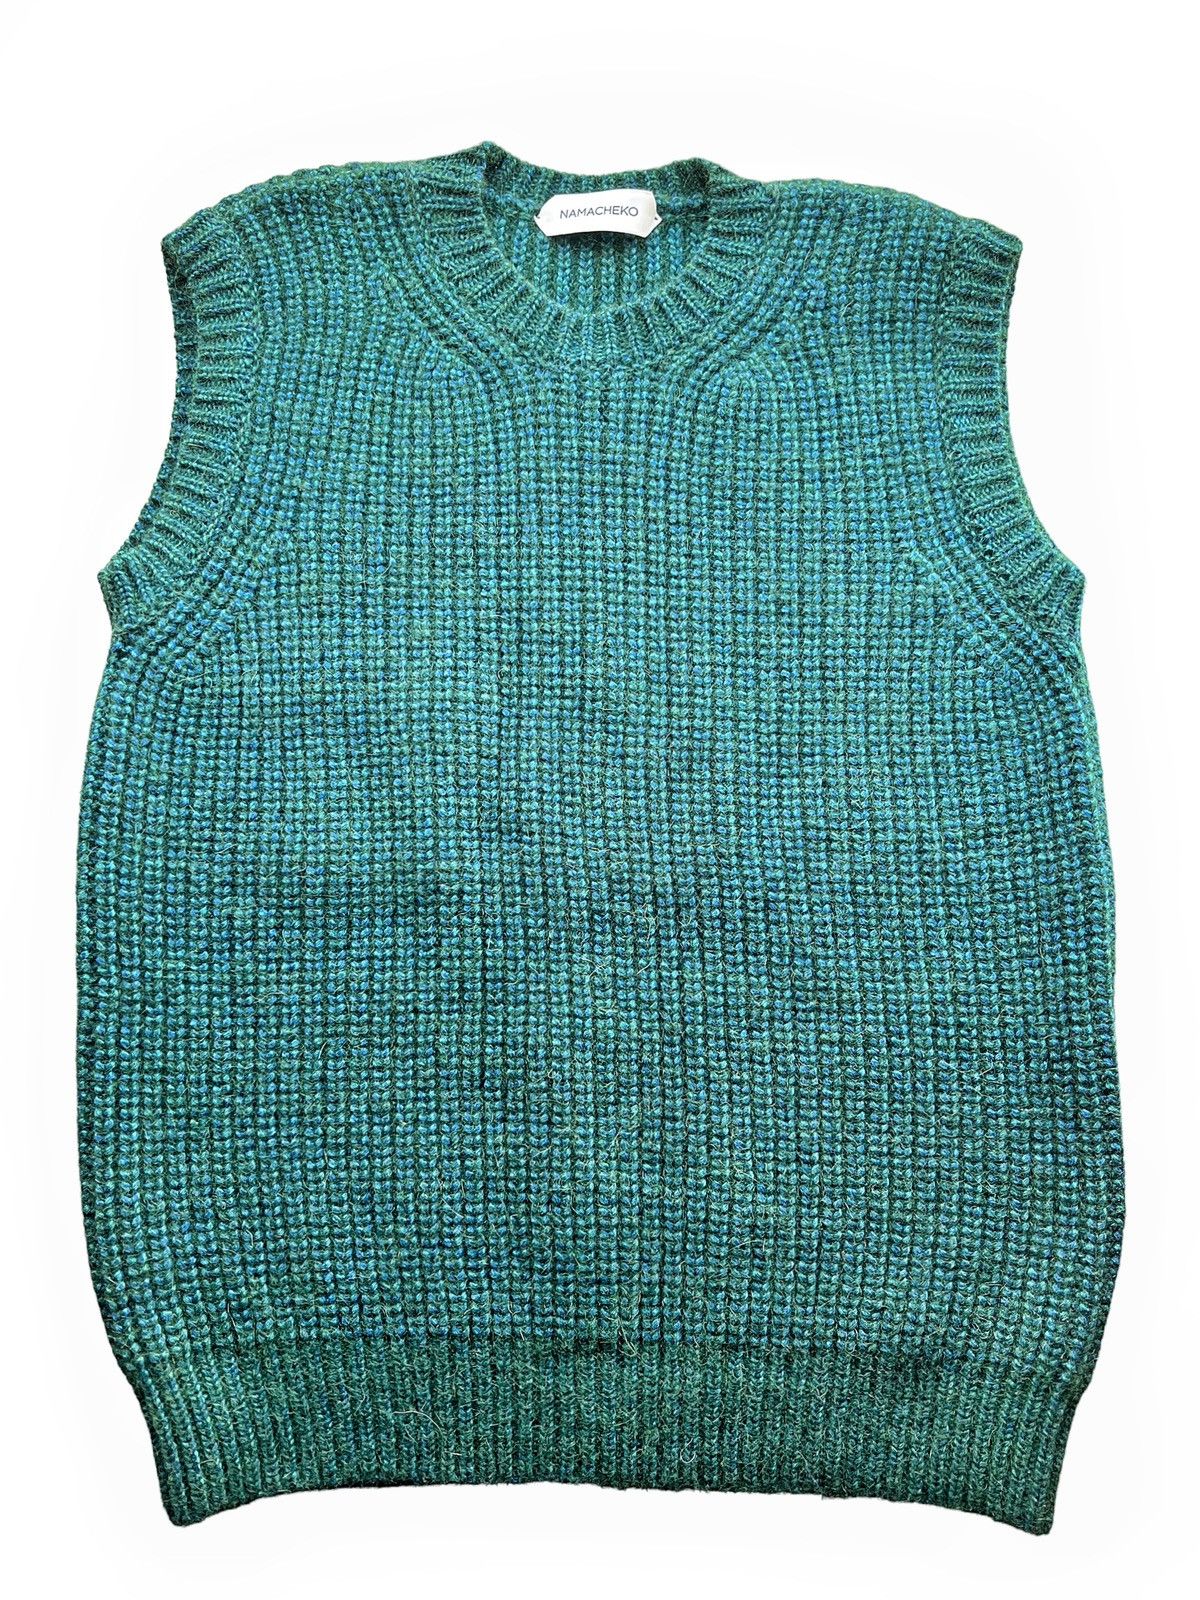 Namacheko Sample Multicolor Green Knit Alpaca Vest | Grailed